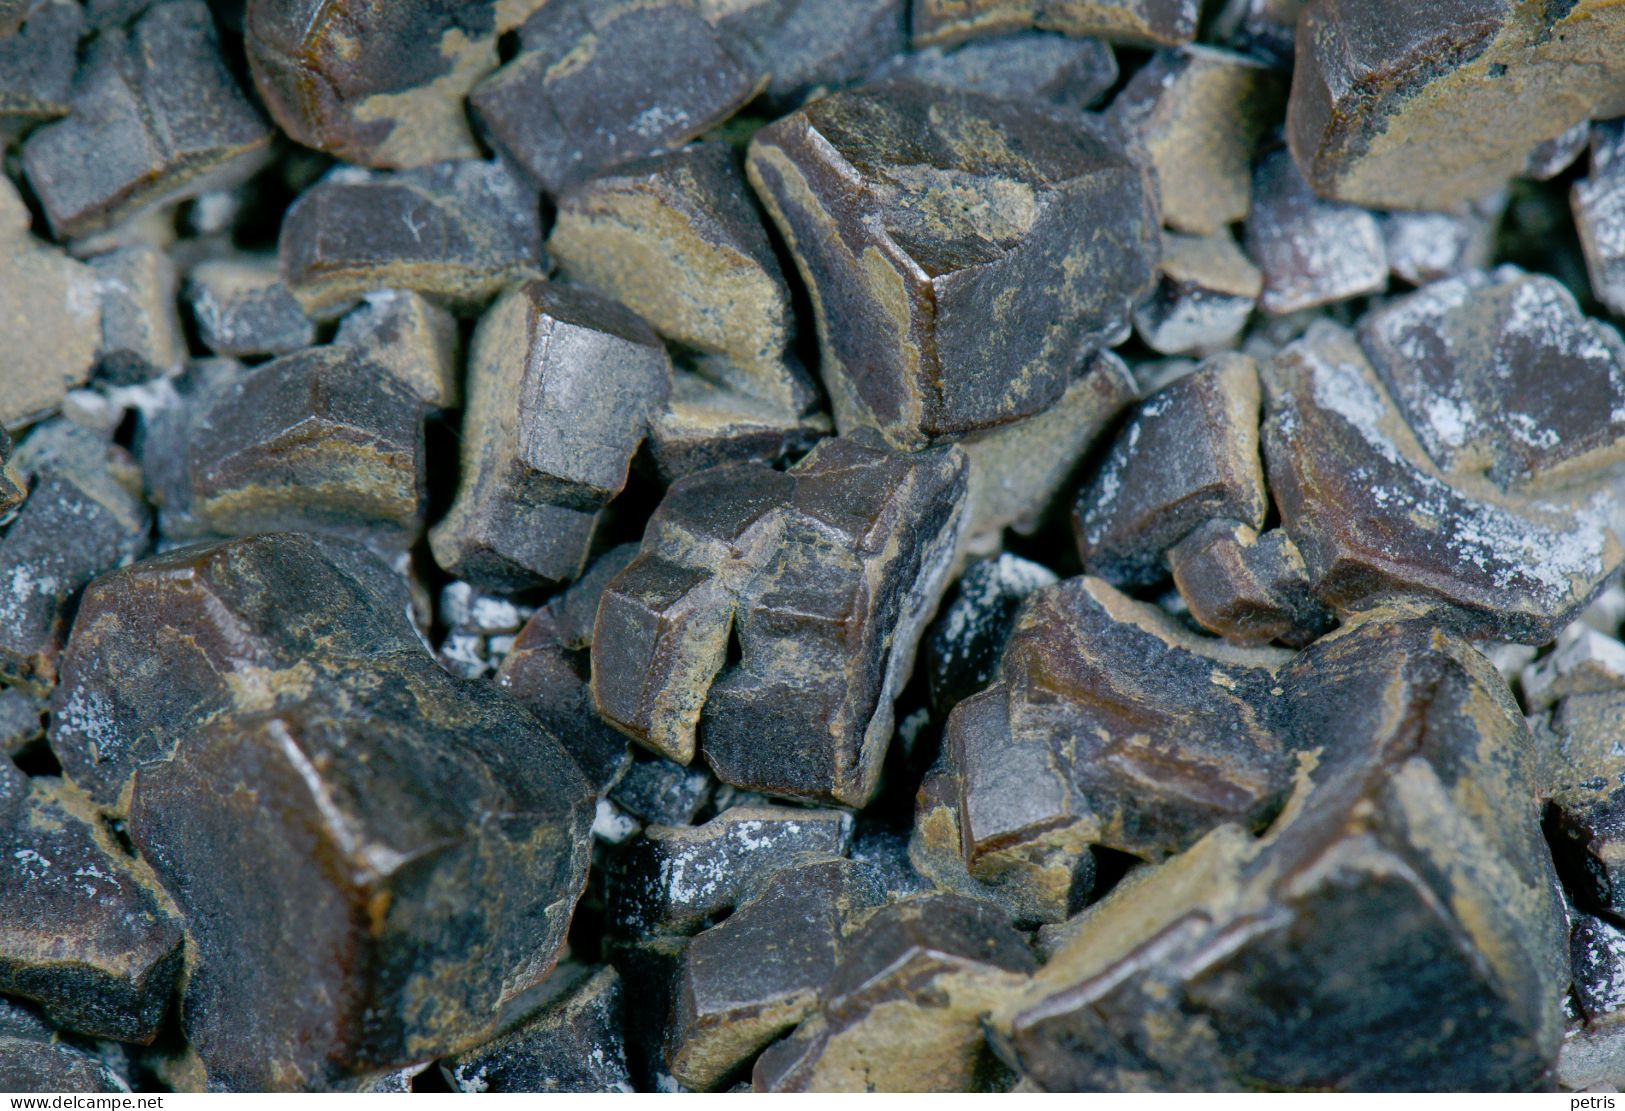 Mineral - Endlichite Toussit, Marocco) - Lot. 722 - Minerals